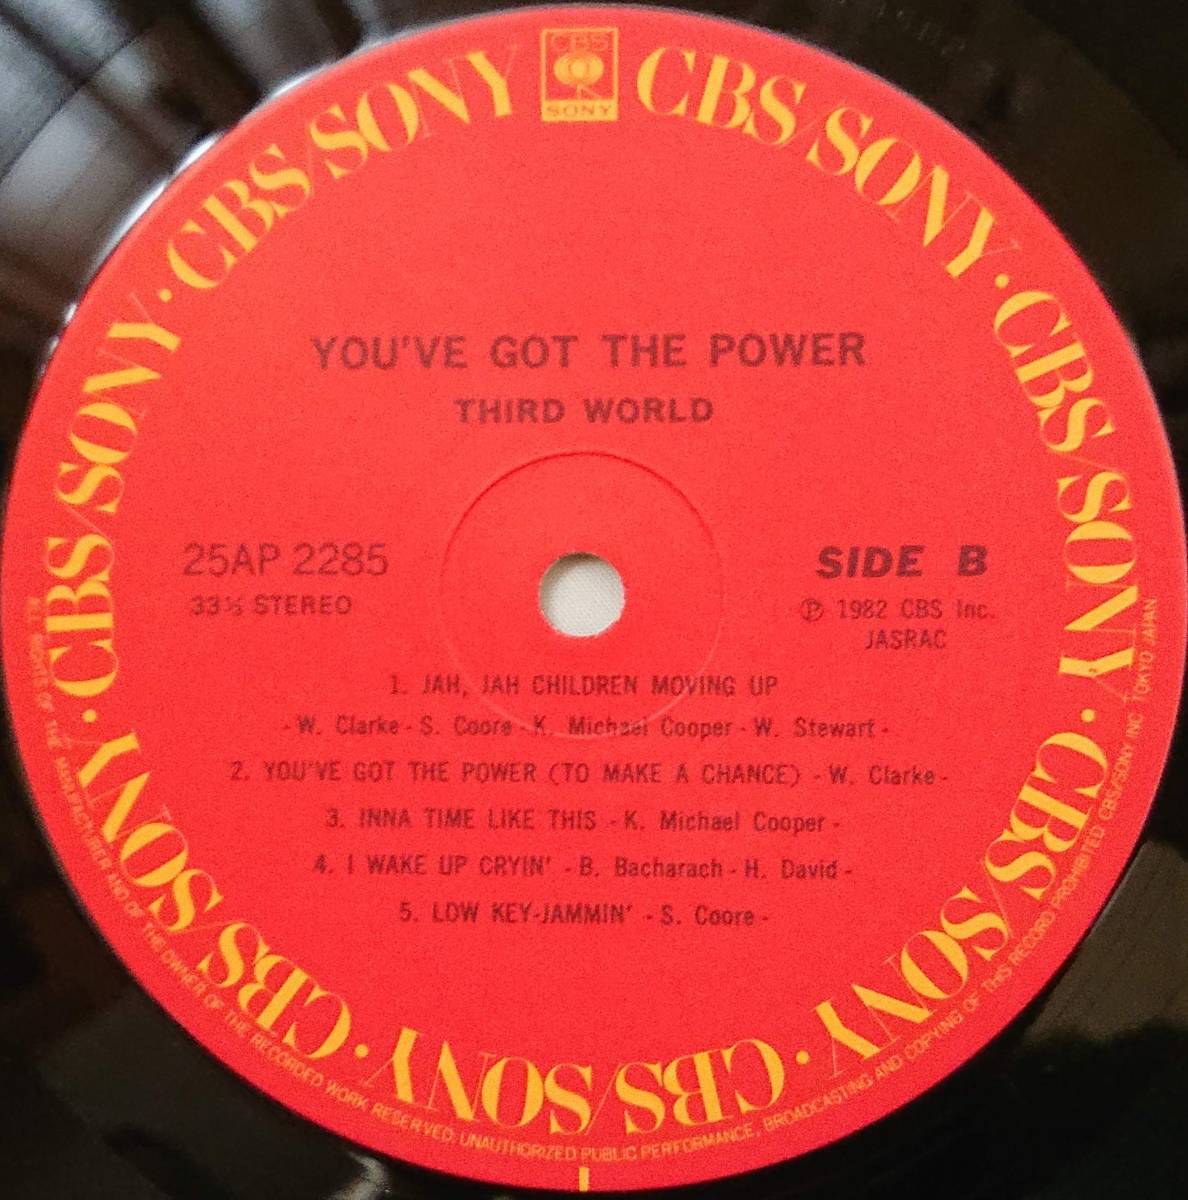 THIRD WORLD : YOU'VE GOT THE POWER サード・ワールド 帯付き 国内盤 中古 アナログ LPレコード盤 1982年 25AP 2285 M2-KDO-1210_画像6